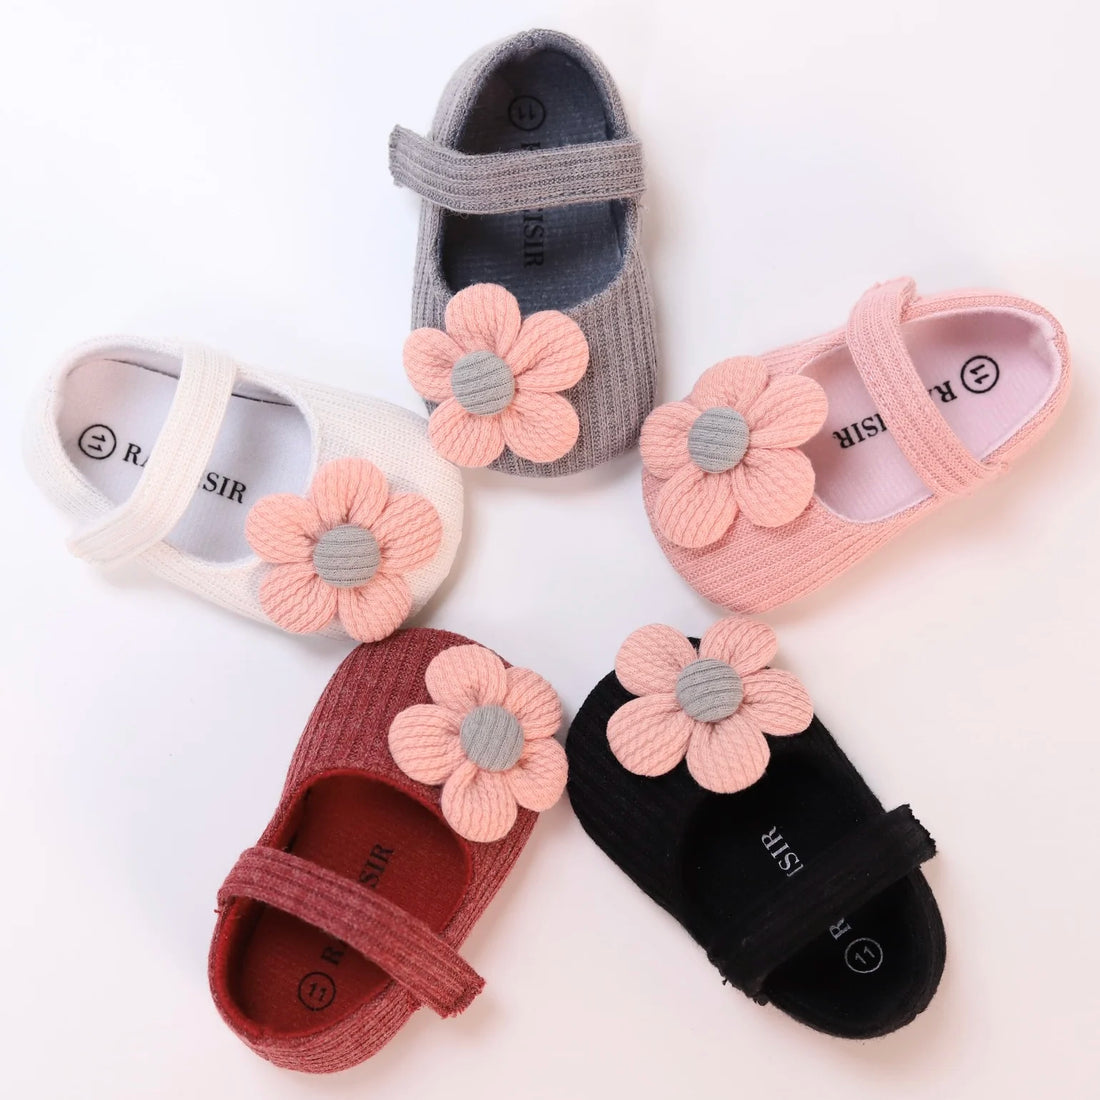 Cute Flower First Walking Shoes For Baby Girl by Baby Minaj Cruz